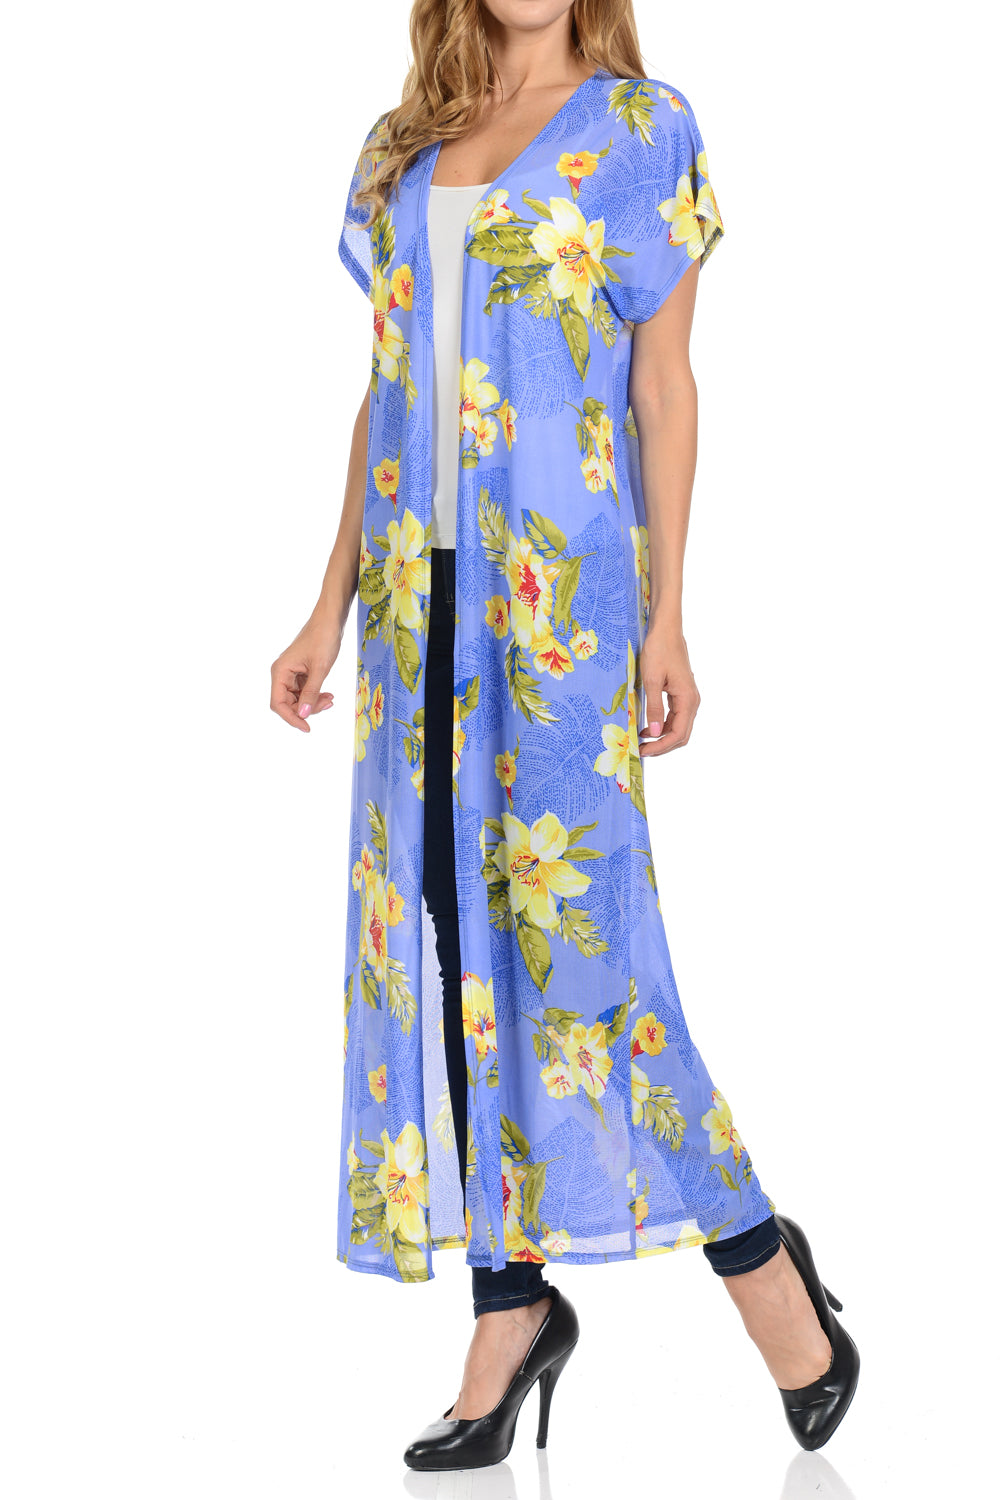 Women Long Cardigan See through Maxi Beach Cover Ups Trendy Fashion -Blue Flower Printed Cardigan